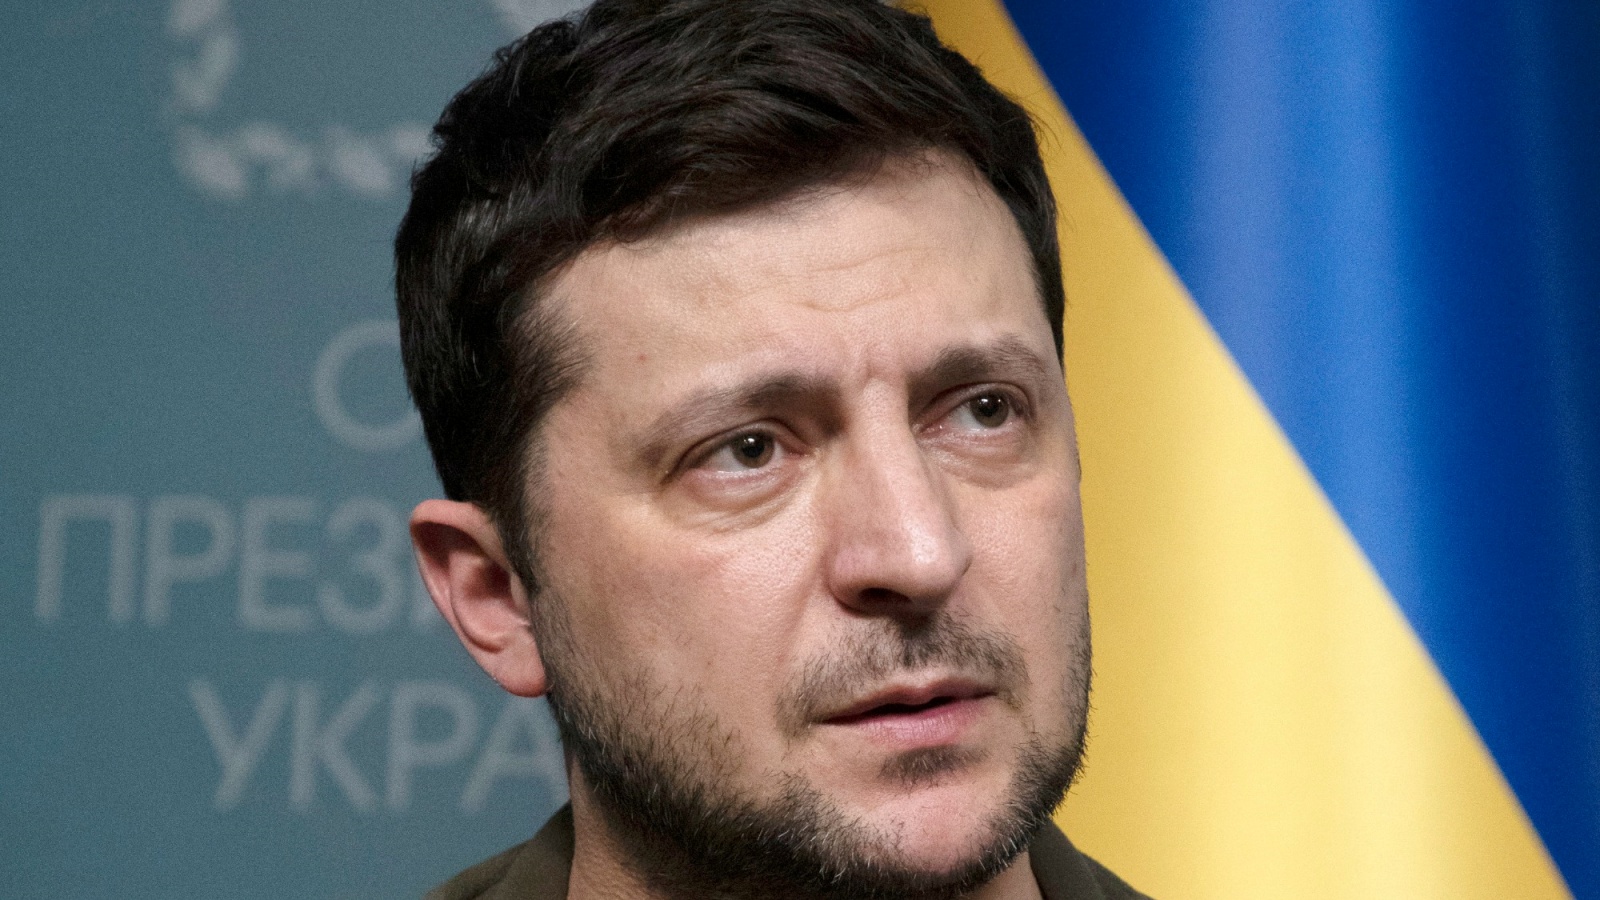 Volodimir Zelenski Mesajele Ultima Ora Razboiul Ucraina